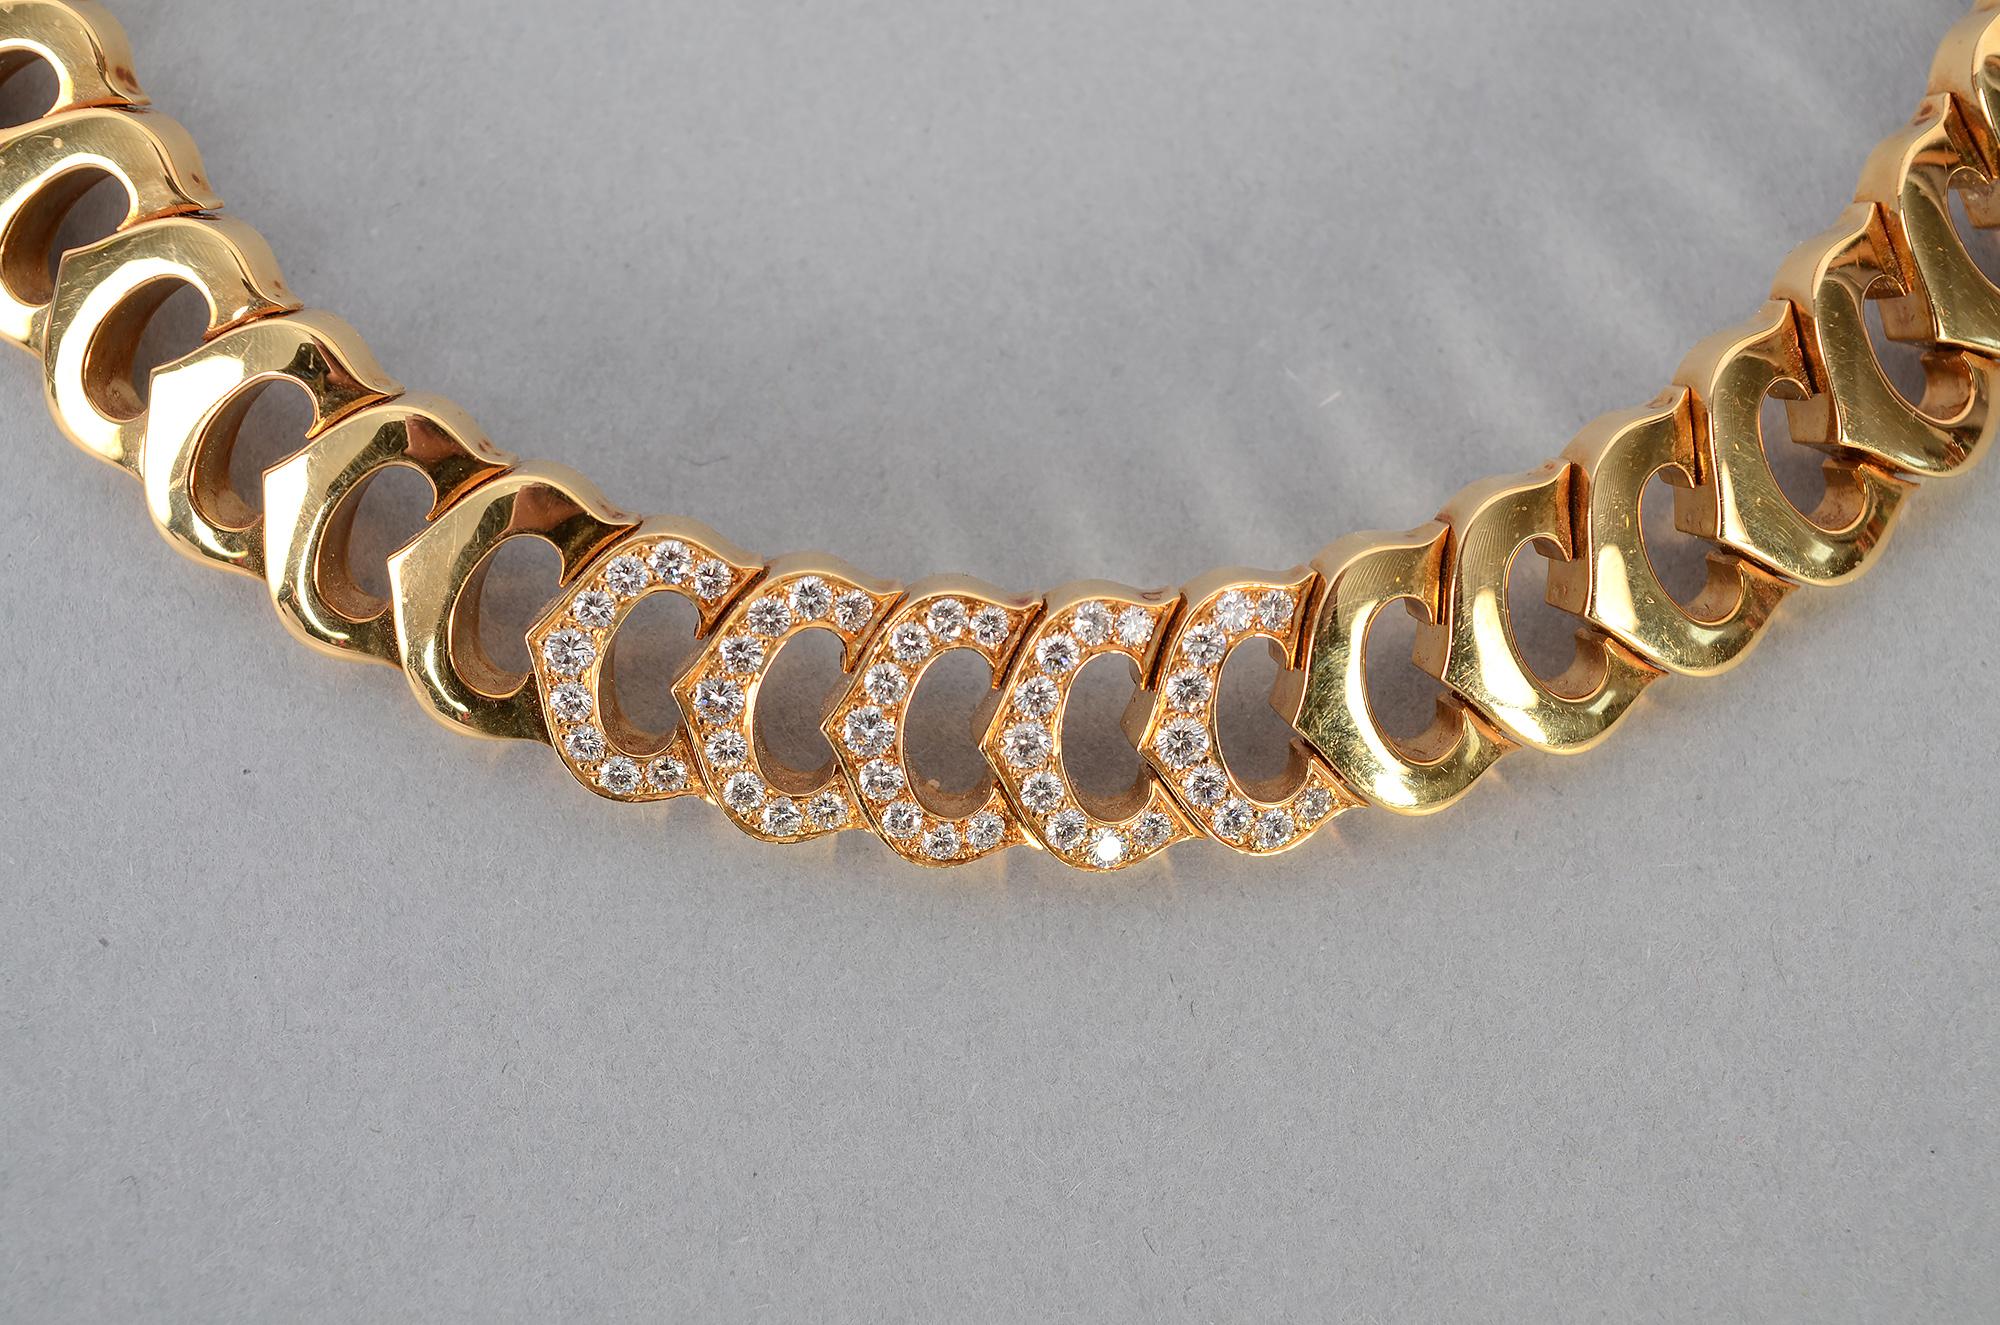 Brilliant Cut C de Cartier Diamond Choker Necklace For Sale